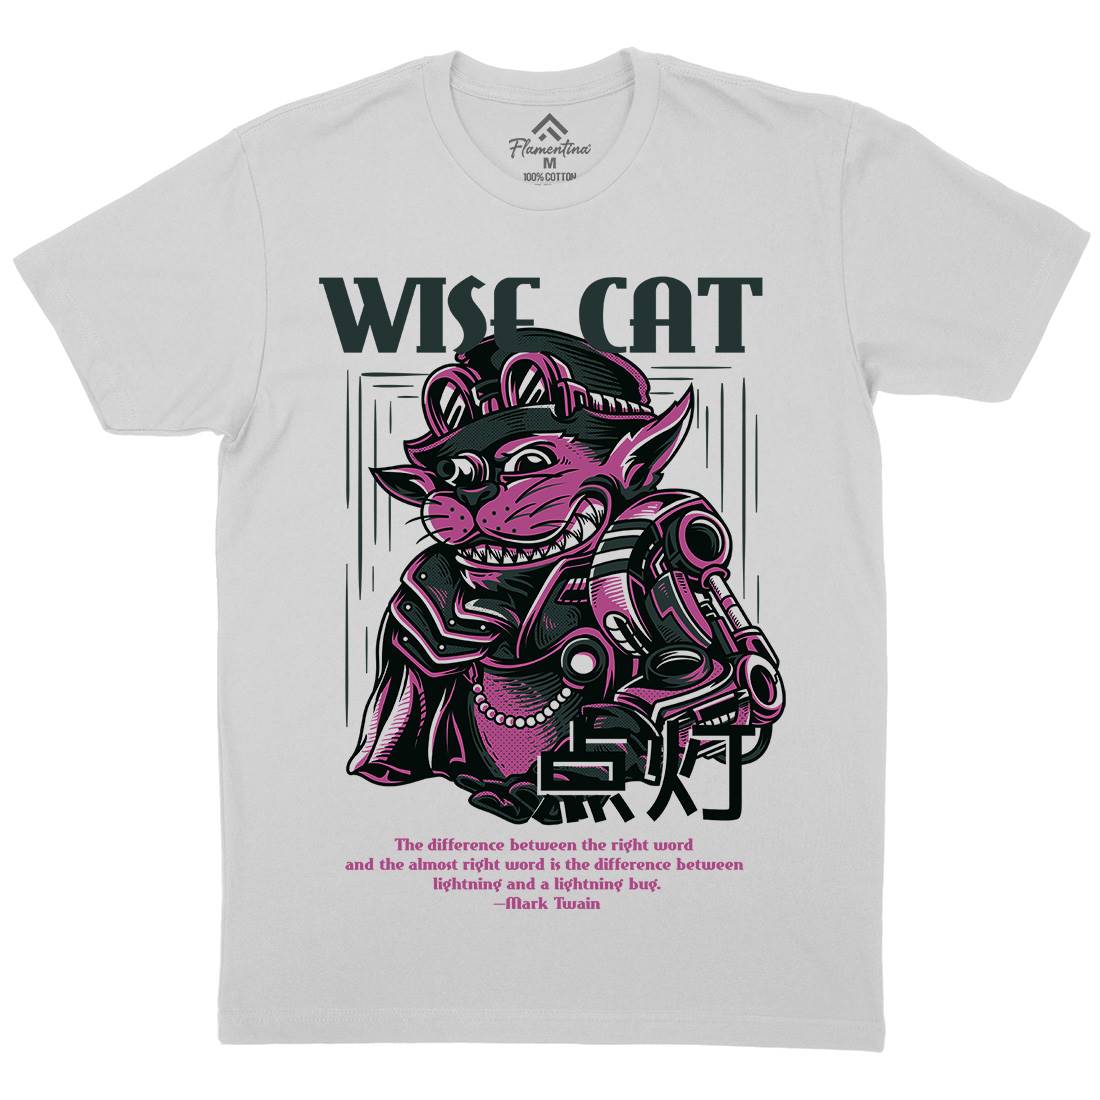 Wise Cat Mens Crew Neck T-Shirt Animals D884